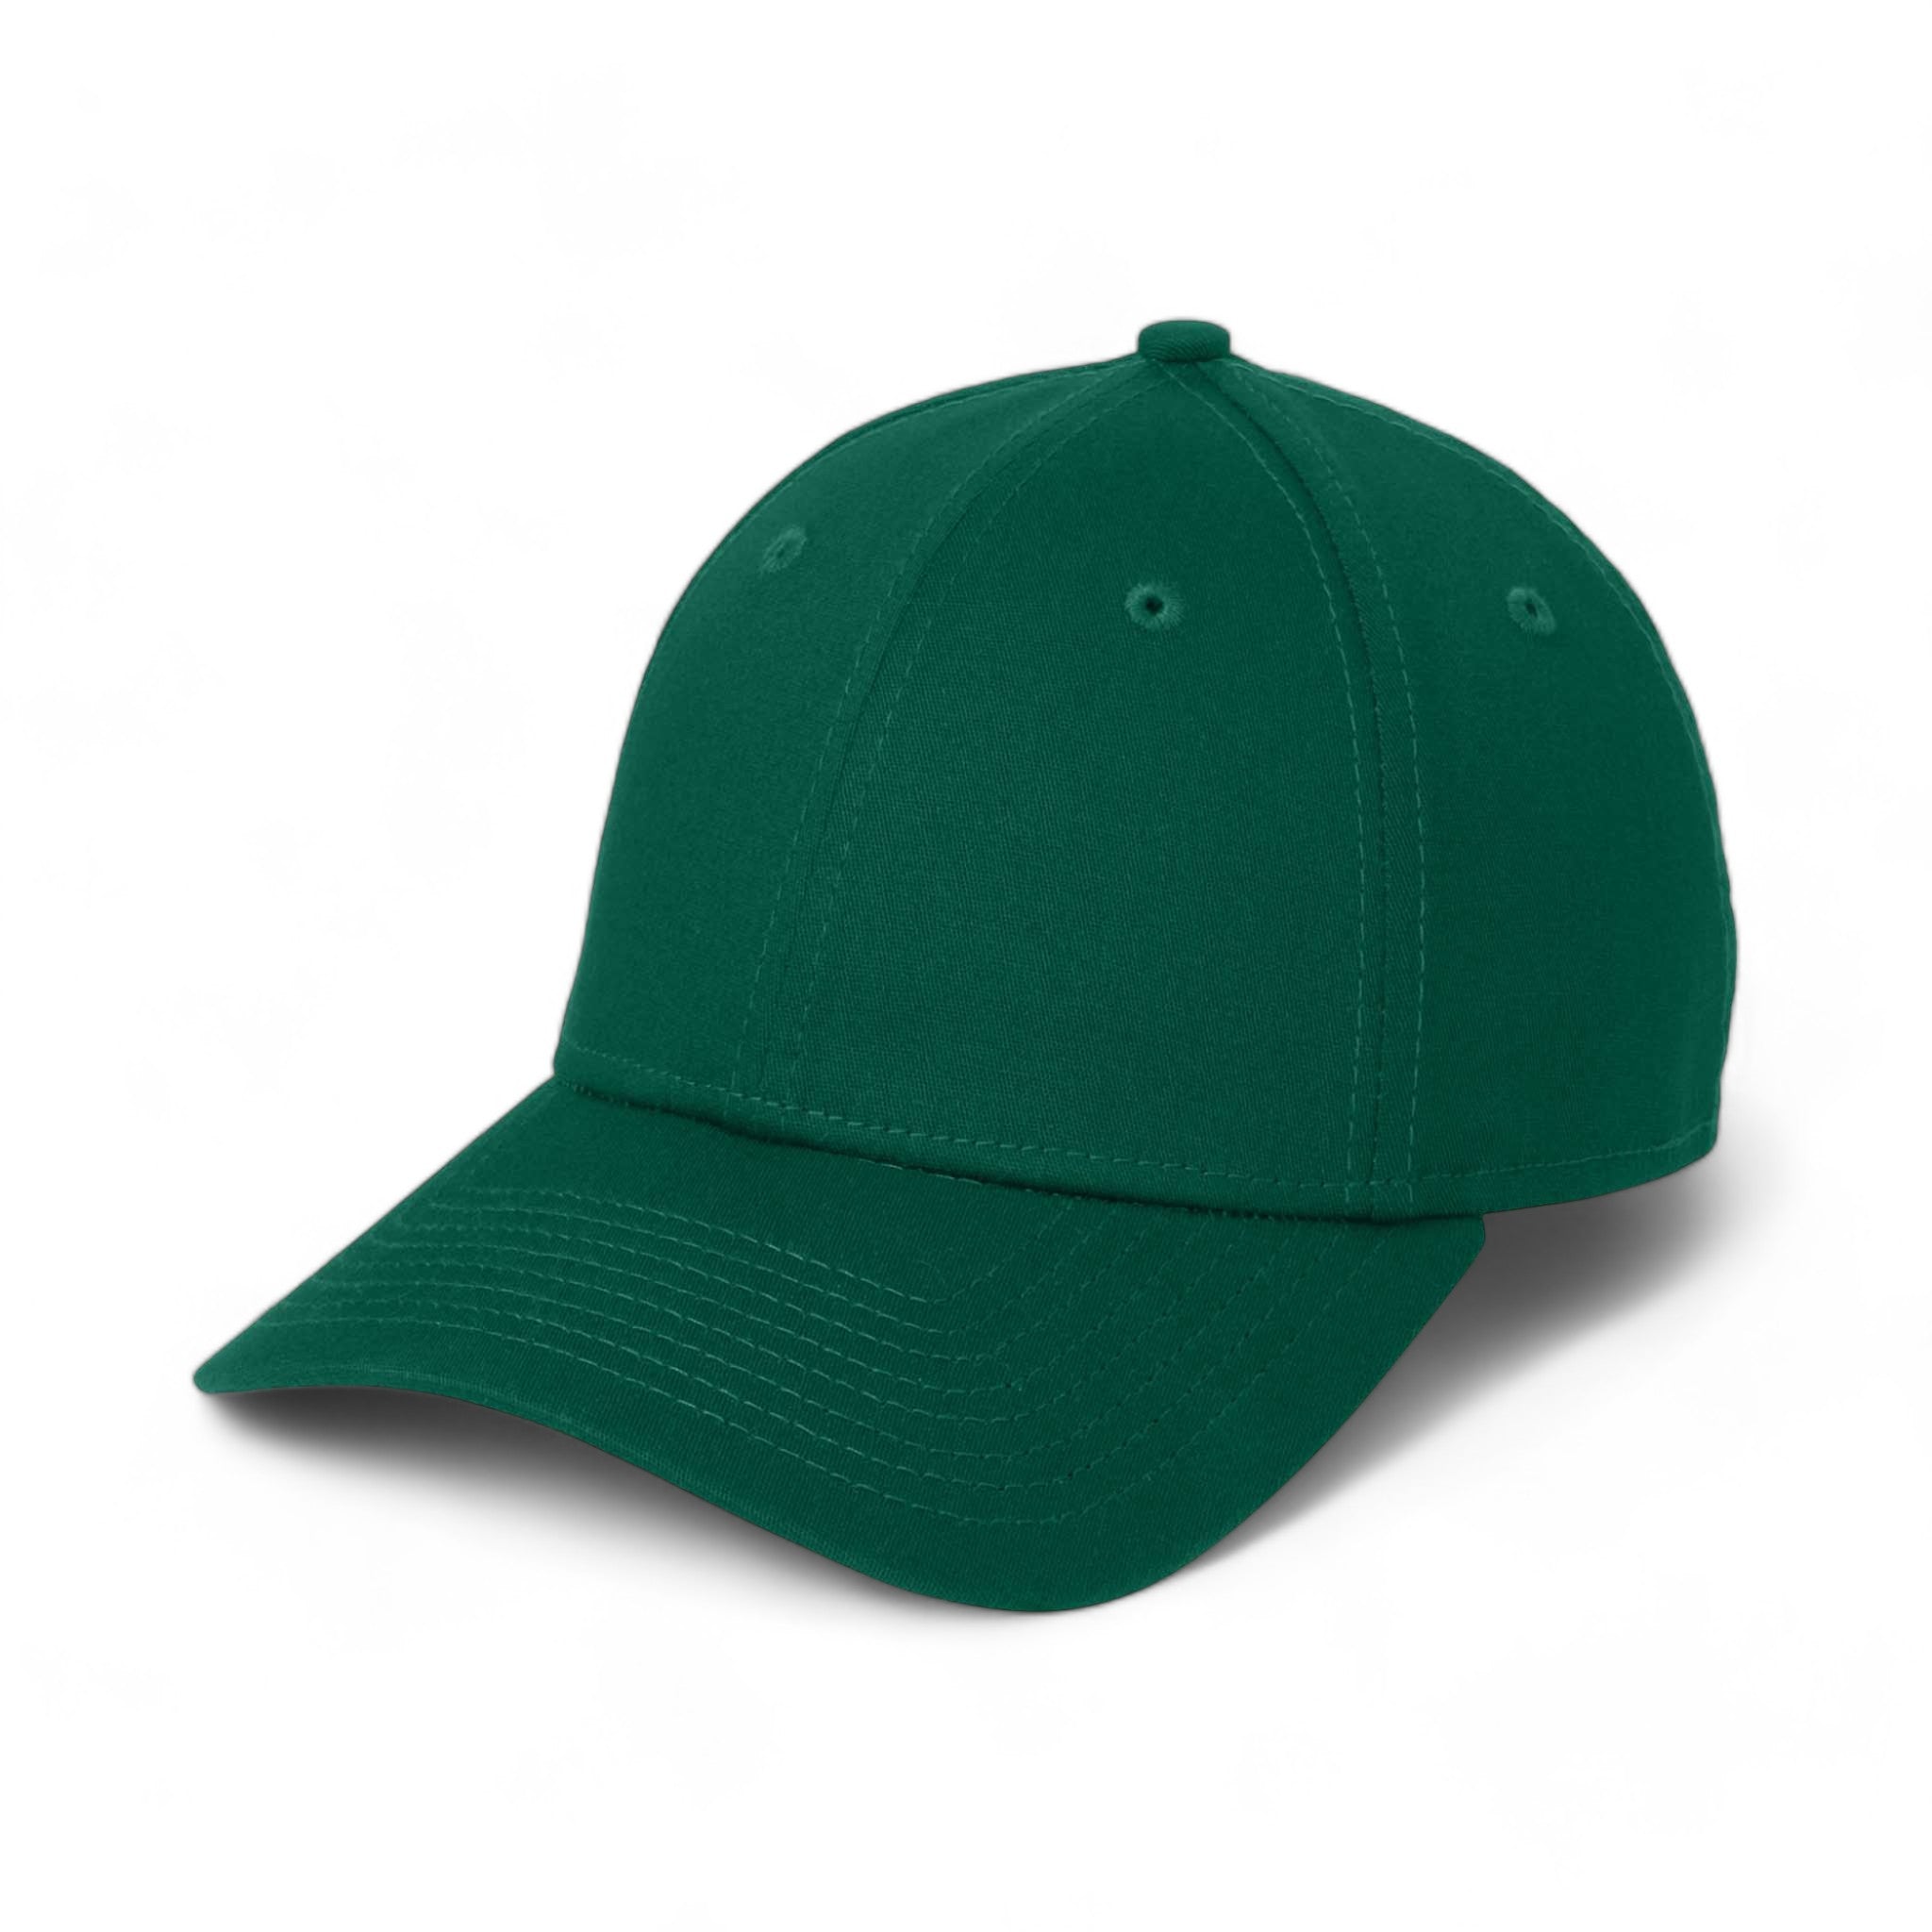 Side view of New Era NE1000 custom hat in dark green